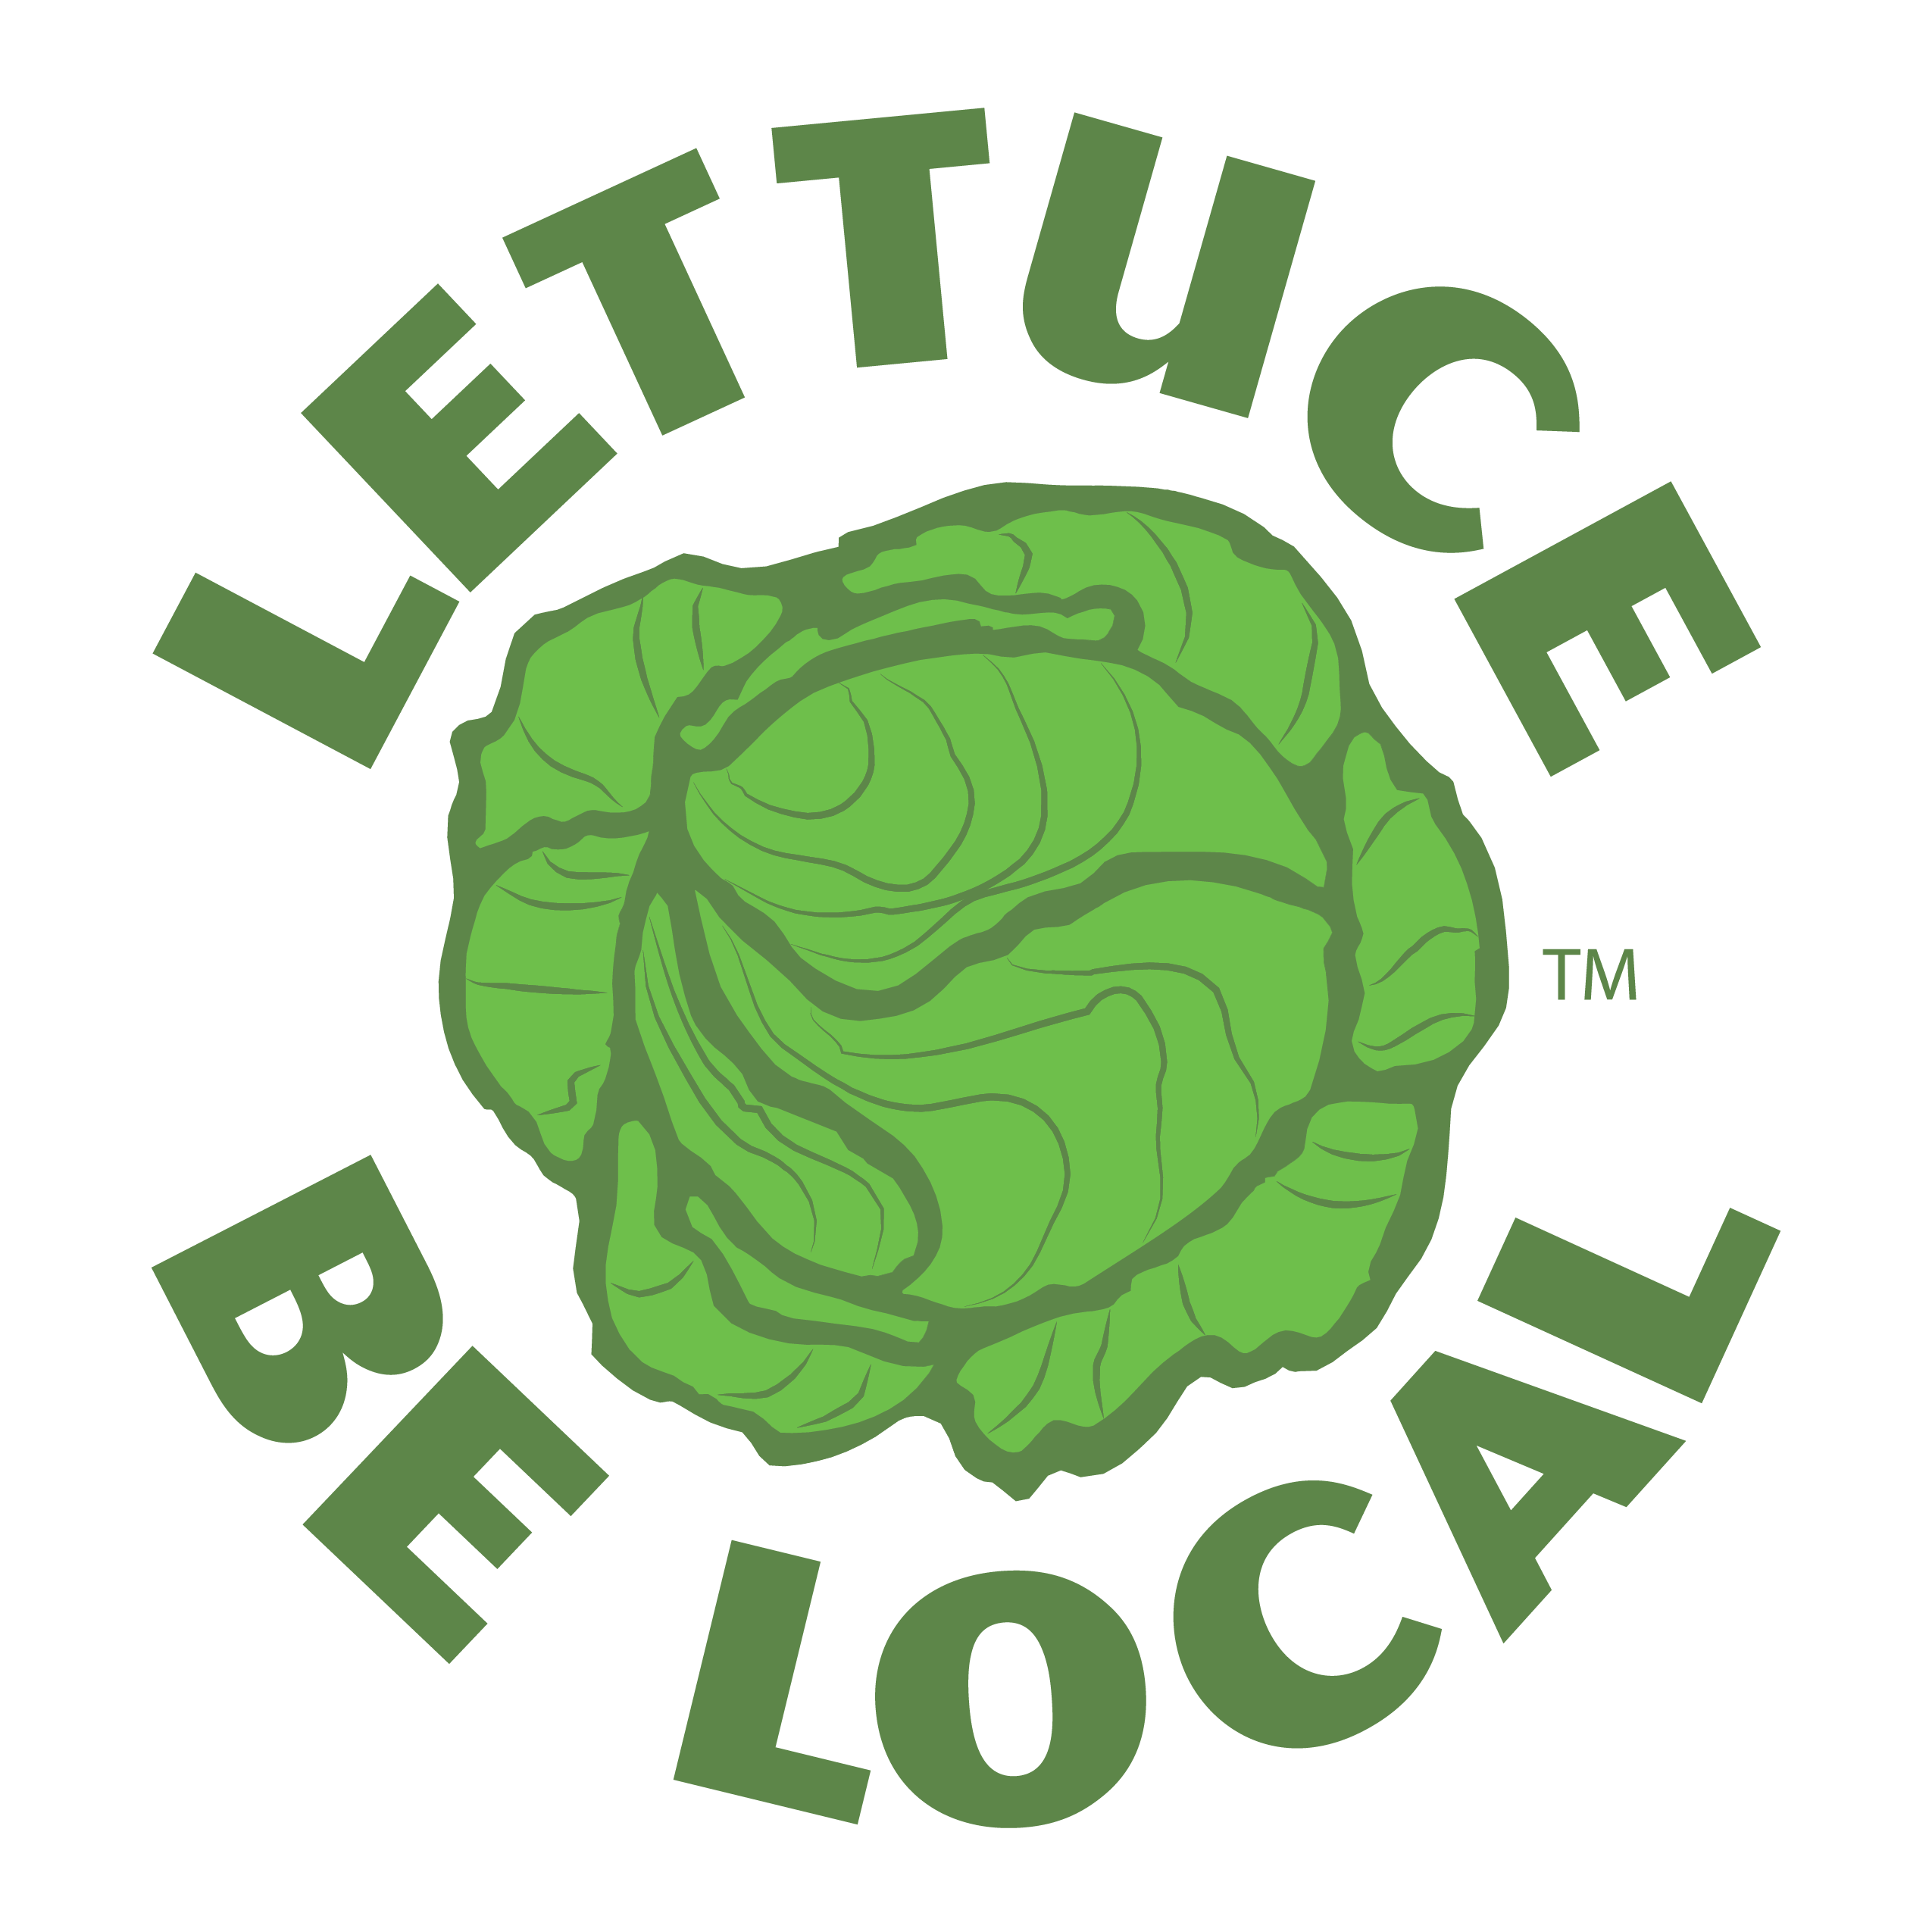 Lettuce Logo - Lettuce Be Local. Central Mass Regional Local Food Hub